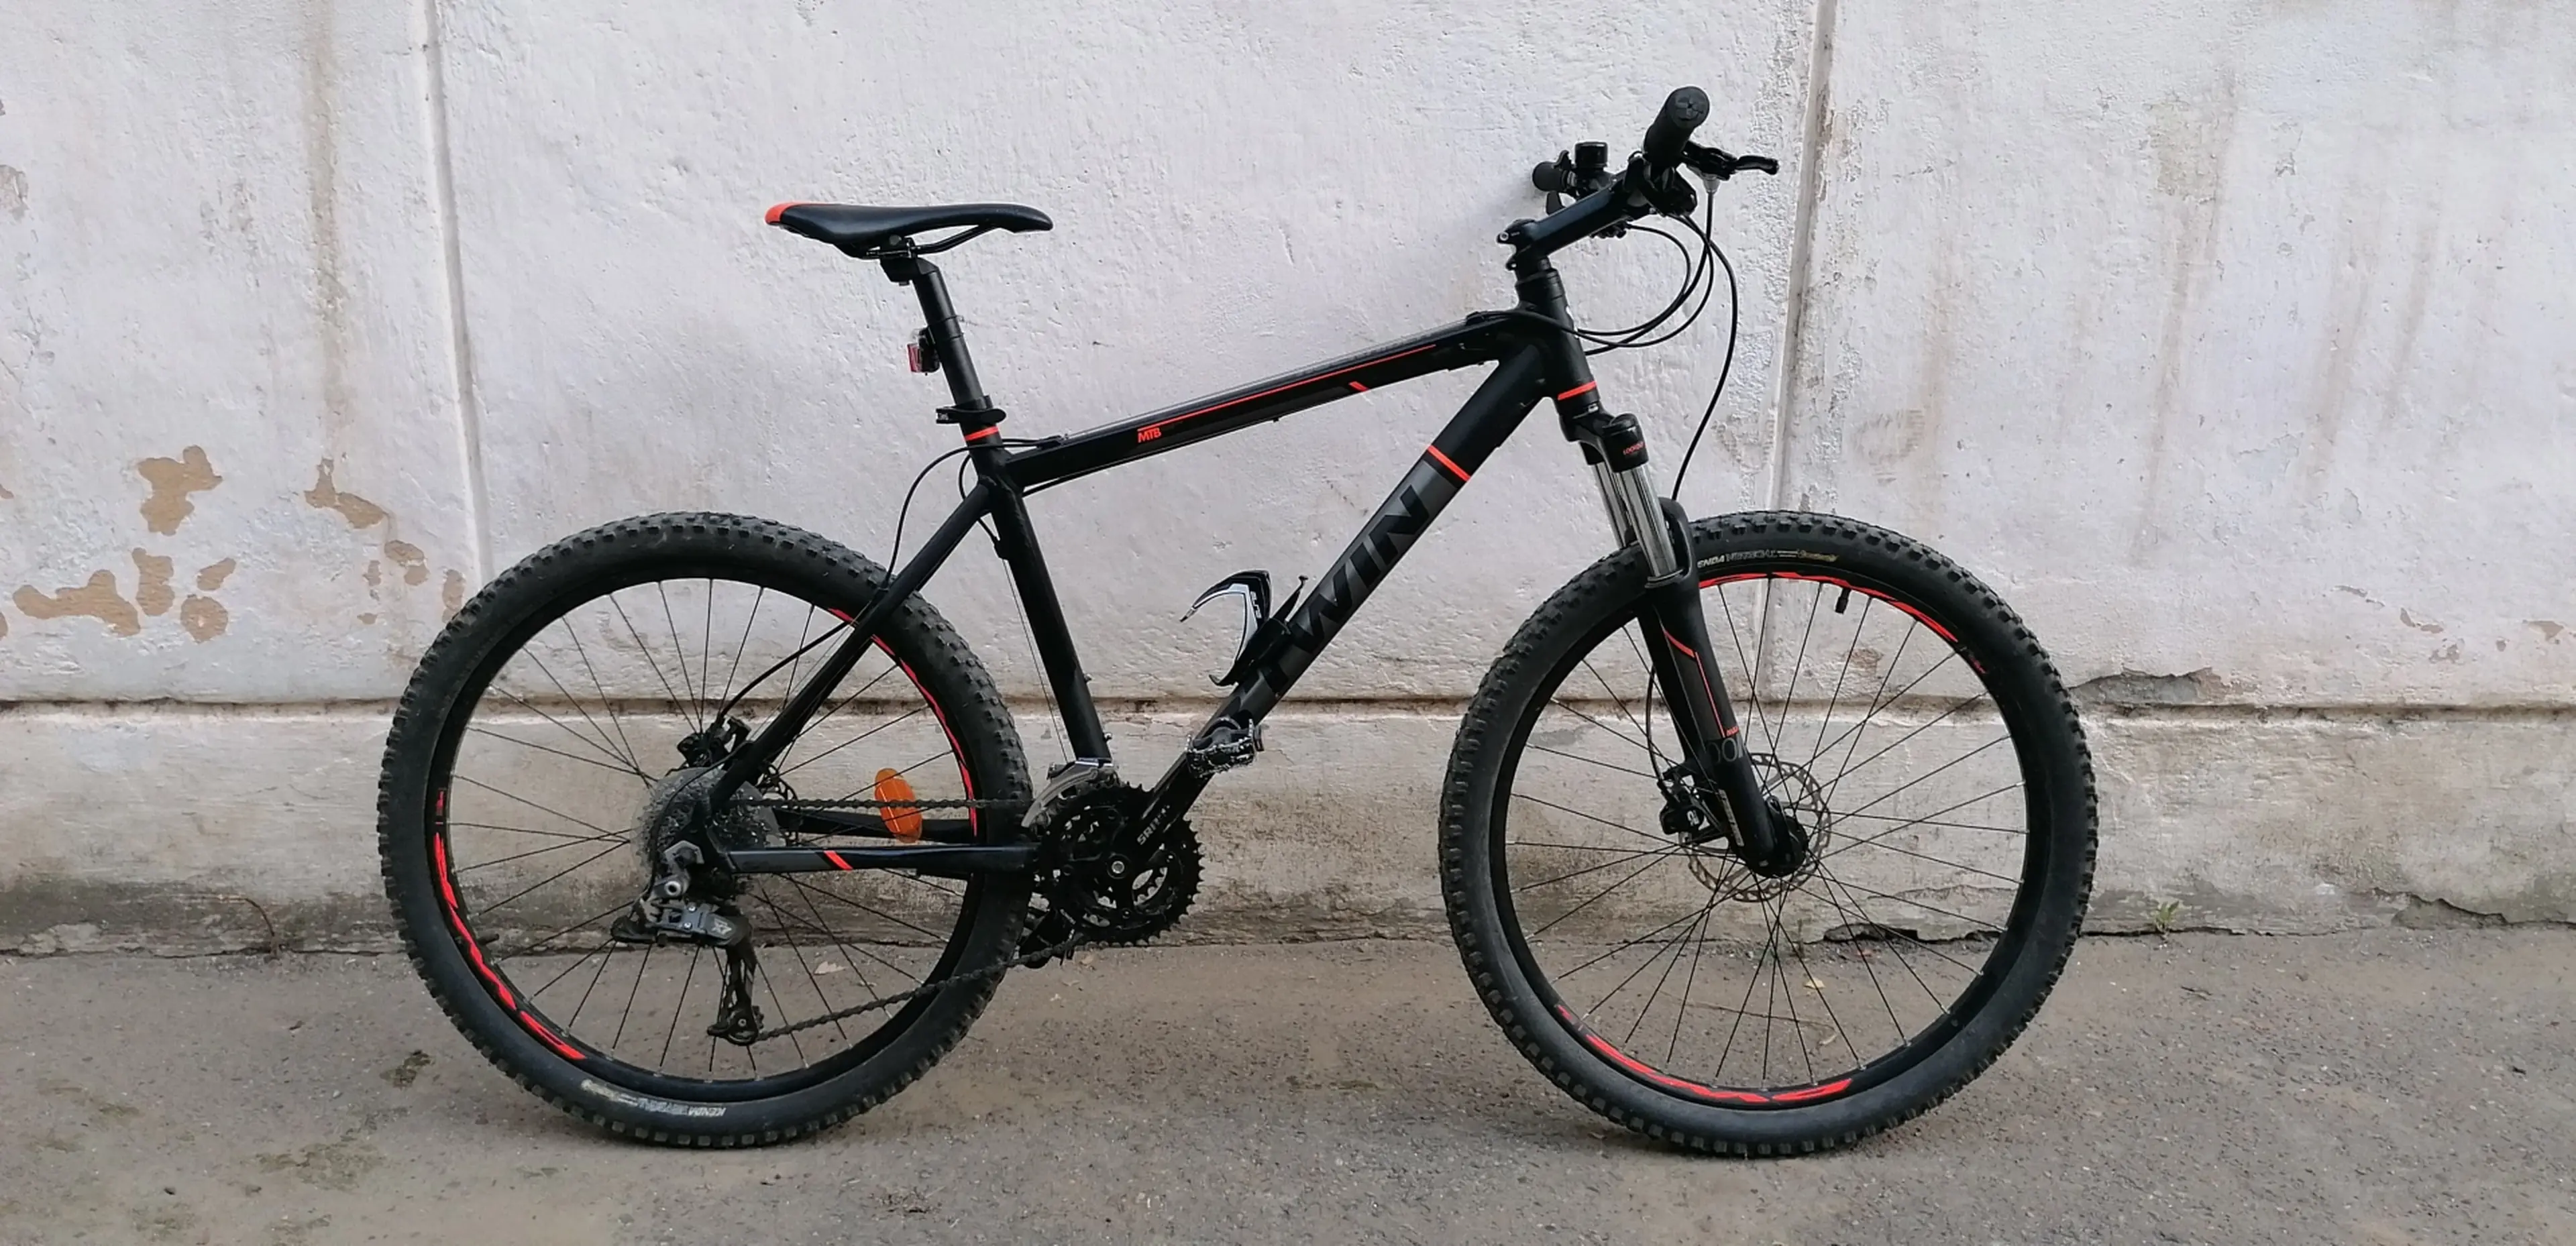 2. Bicicleta RockRider 540